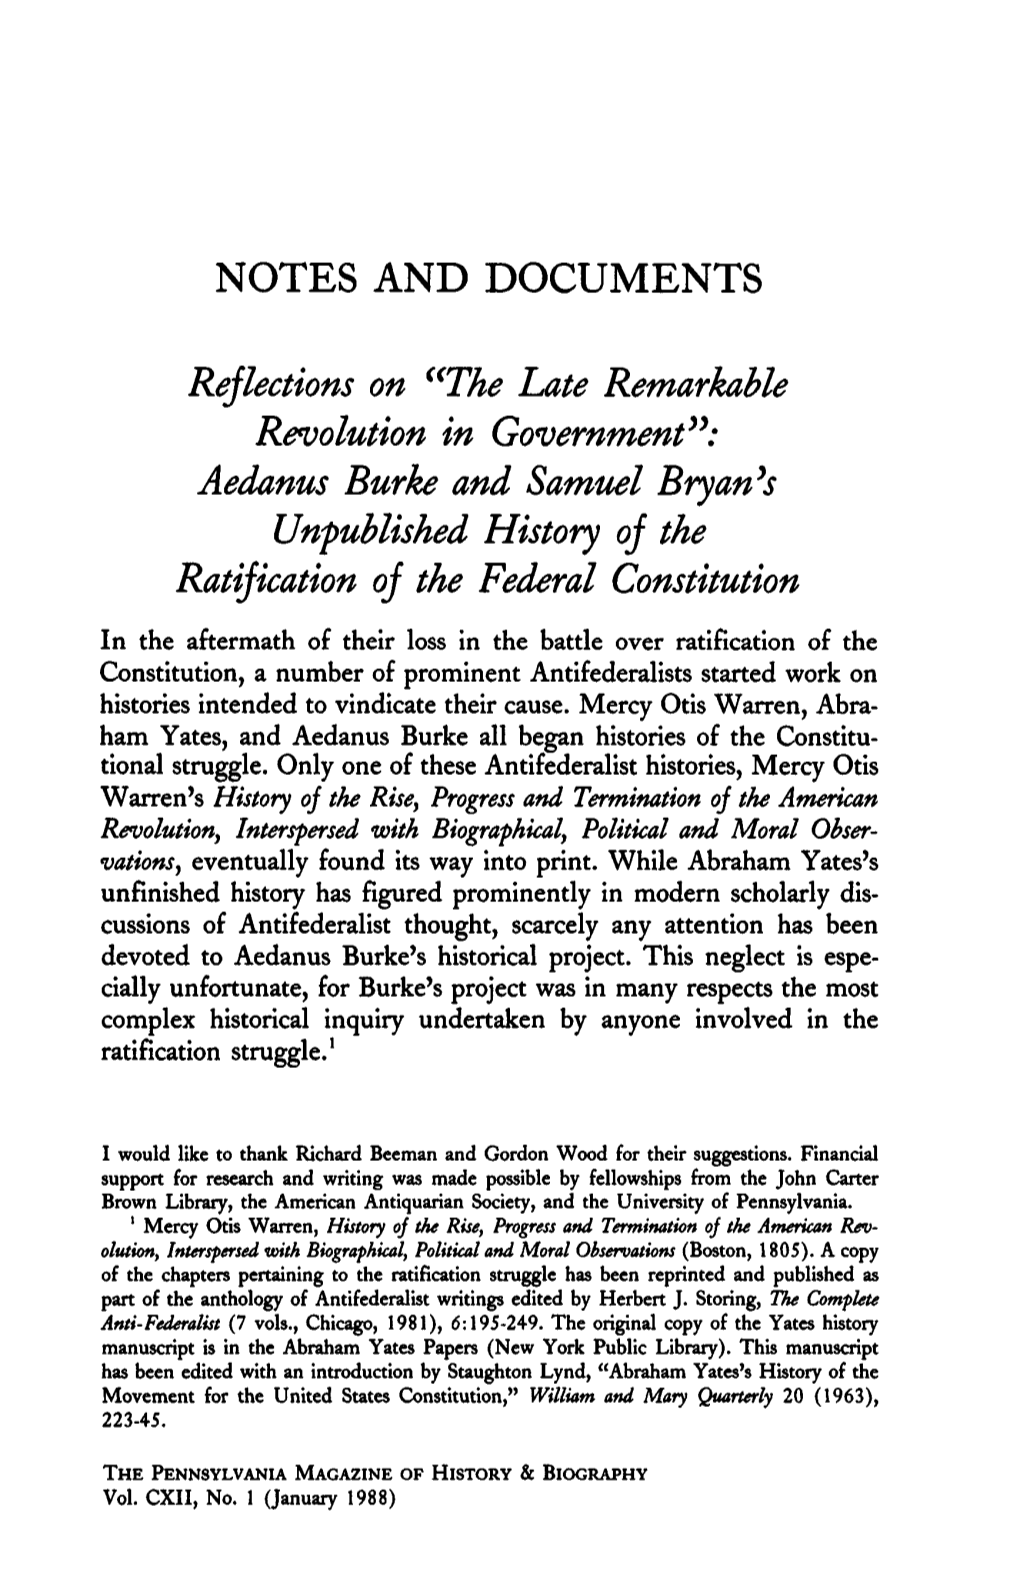 Aedanus Burke and Samuel Bryan's Unpublished History Oj the Ratification Oj the Federal Constitution